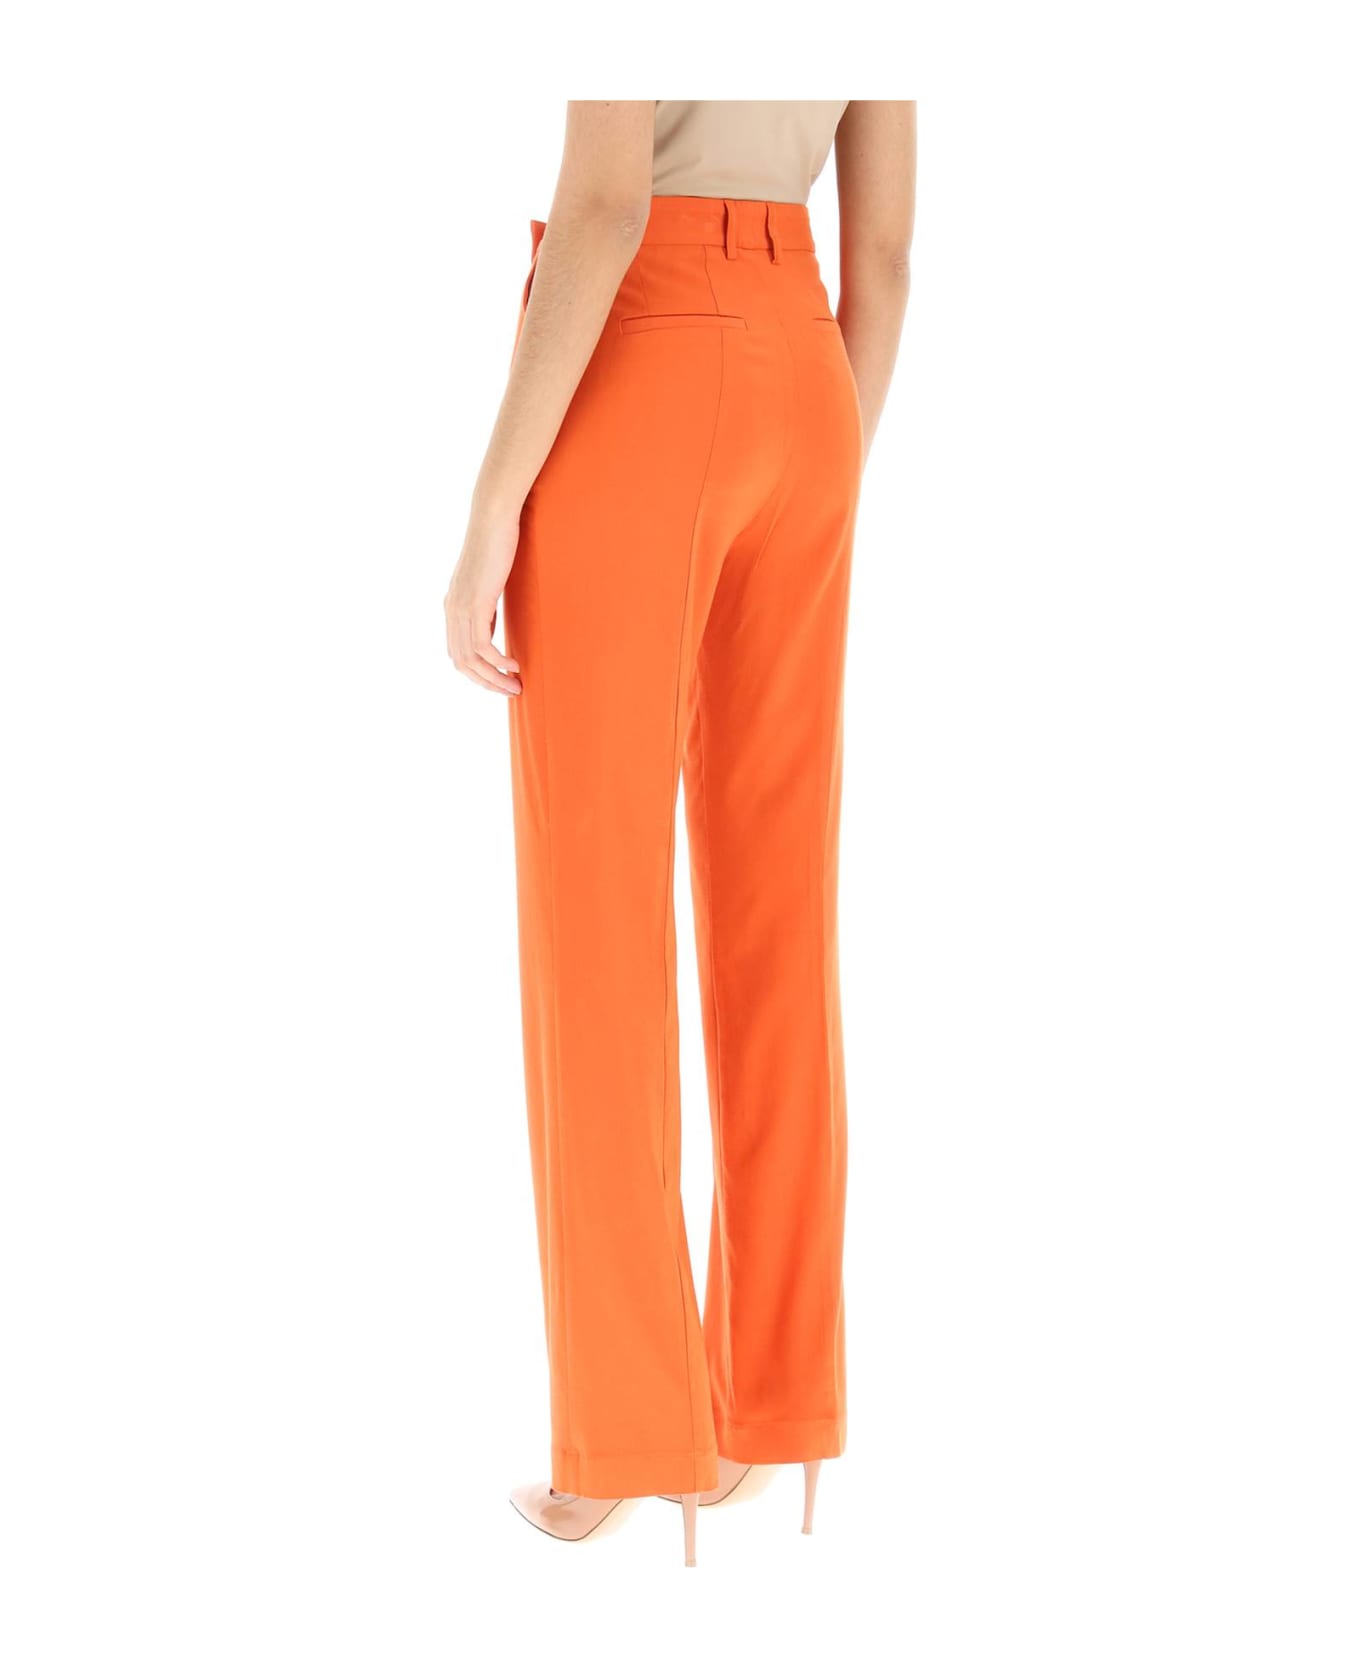 Hebe Studio 'lover' Canvas faille Trousers - ORANGE (Orange)